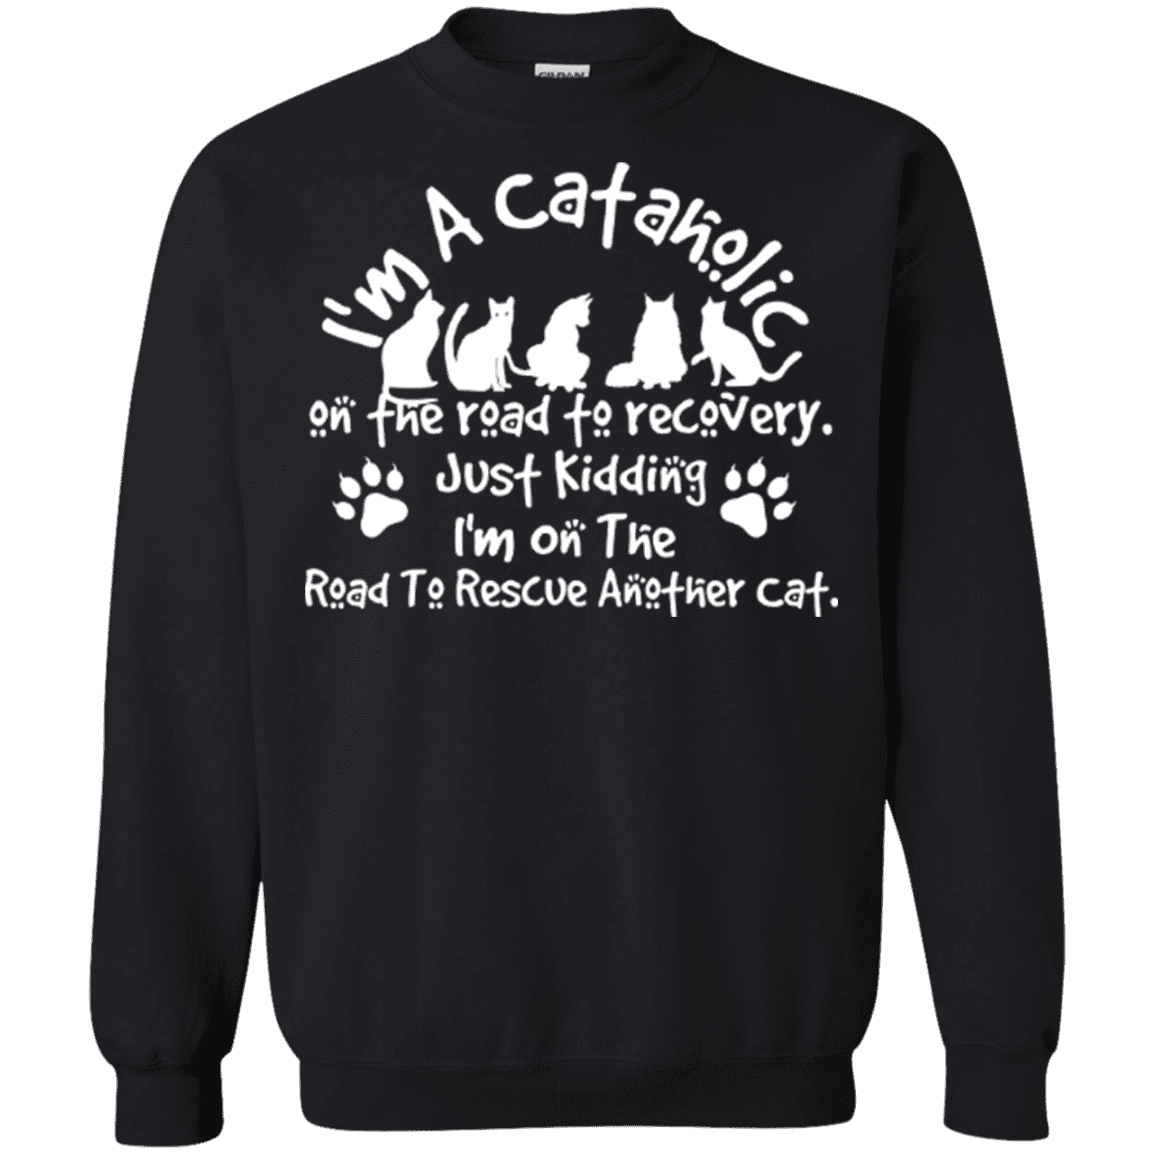 I'm a Cataholic - Sweatshirt.